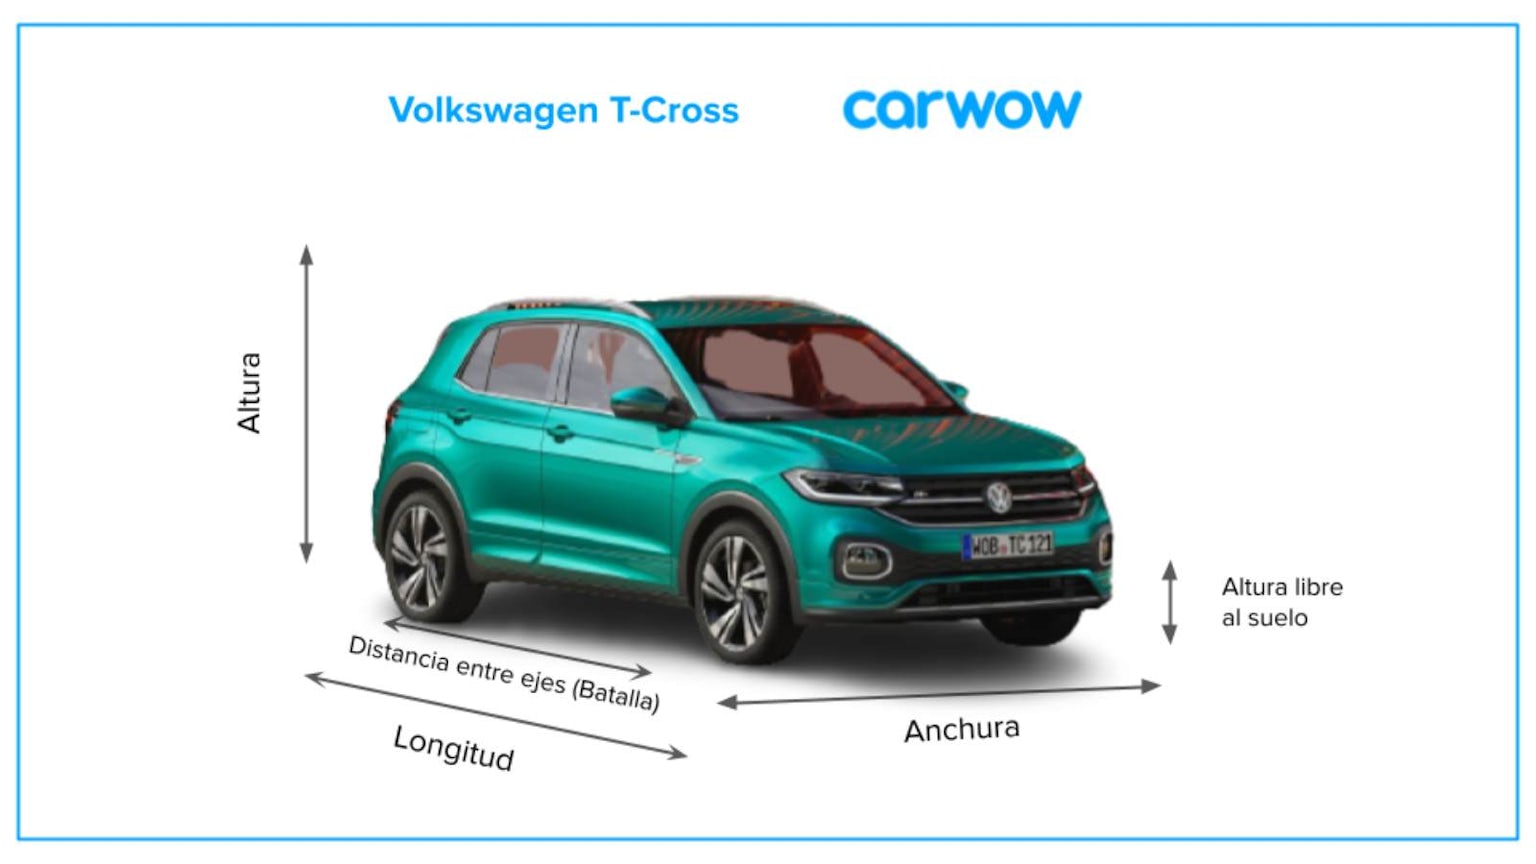 Medidas y maletero del Volkswagen TCross carwow